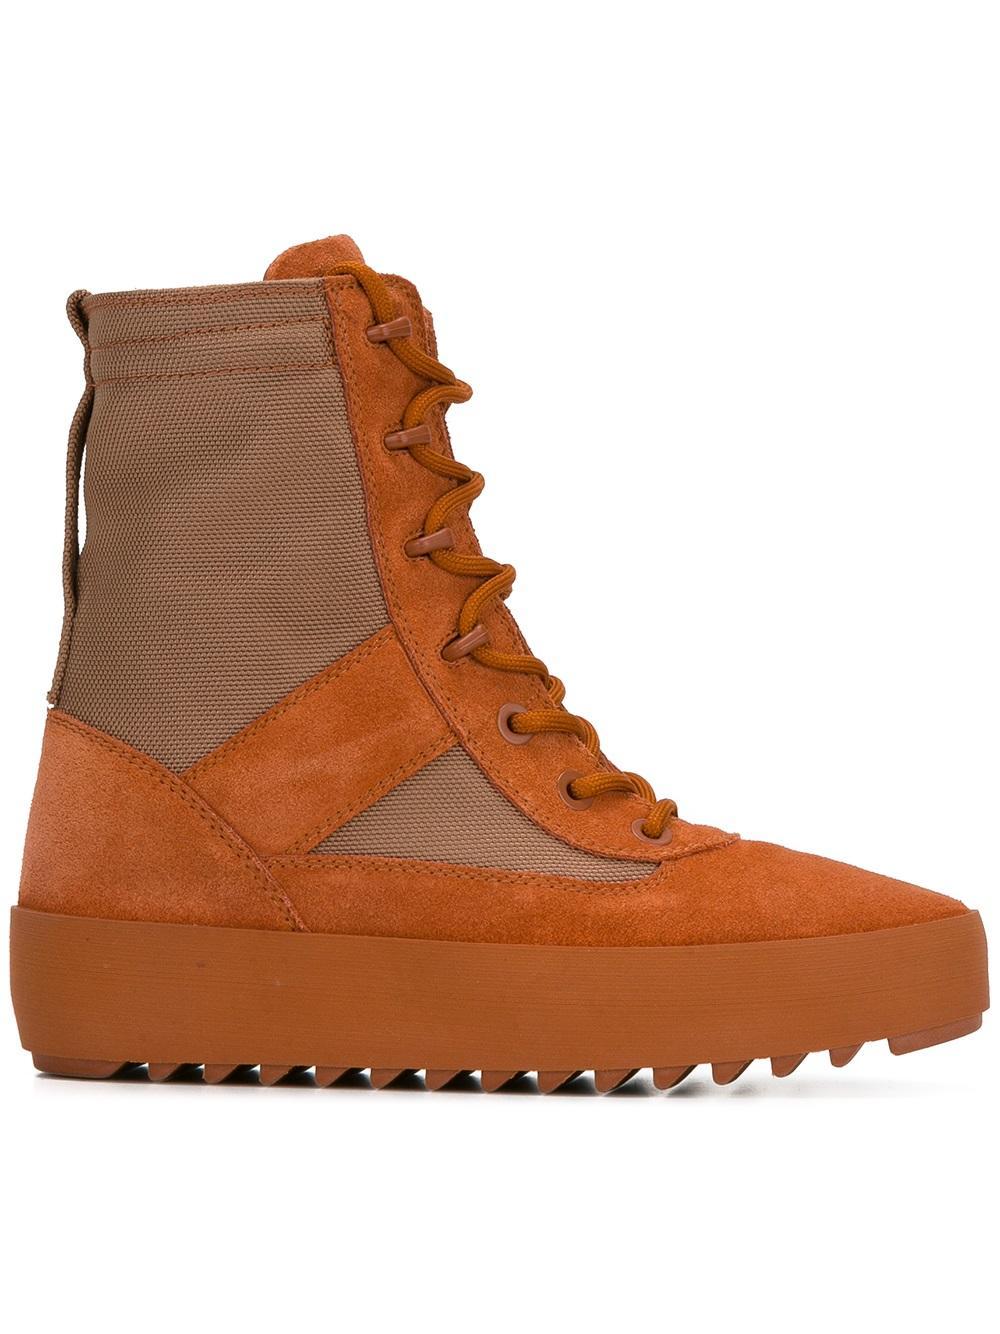 Yeezy Leather Season 3 Military Boots 